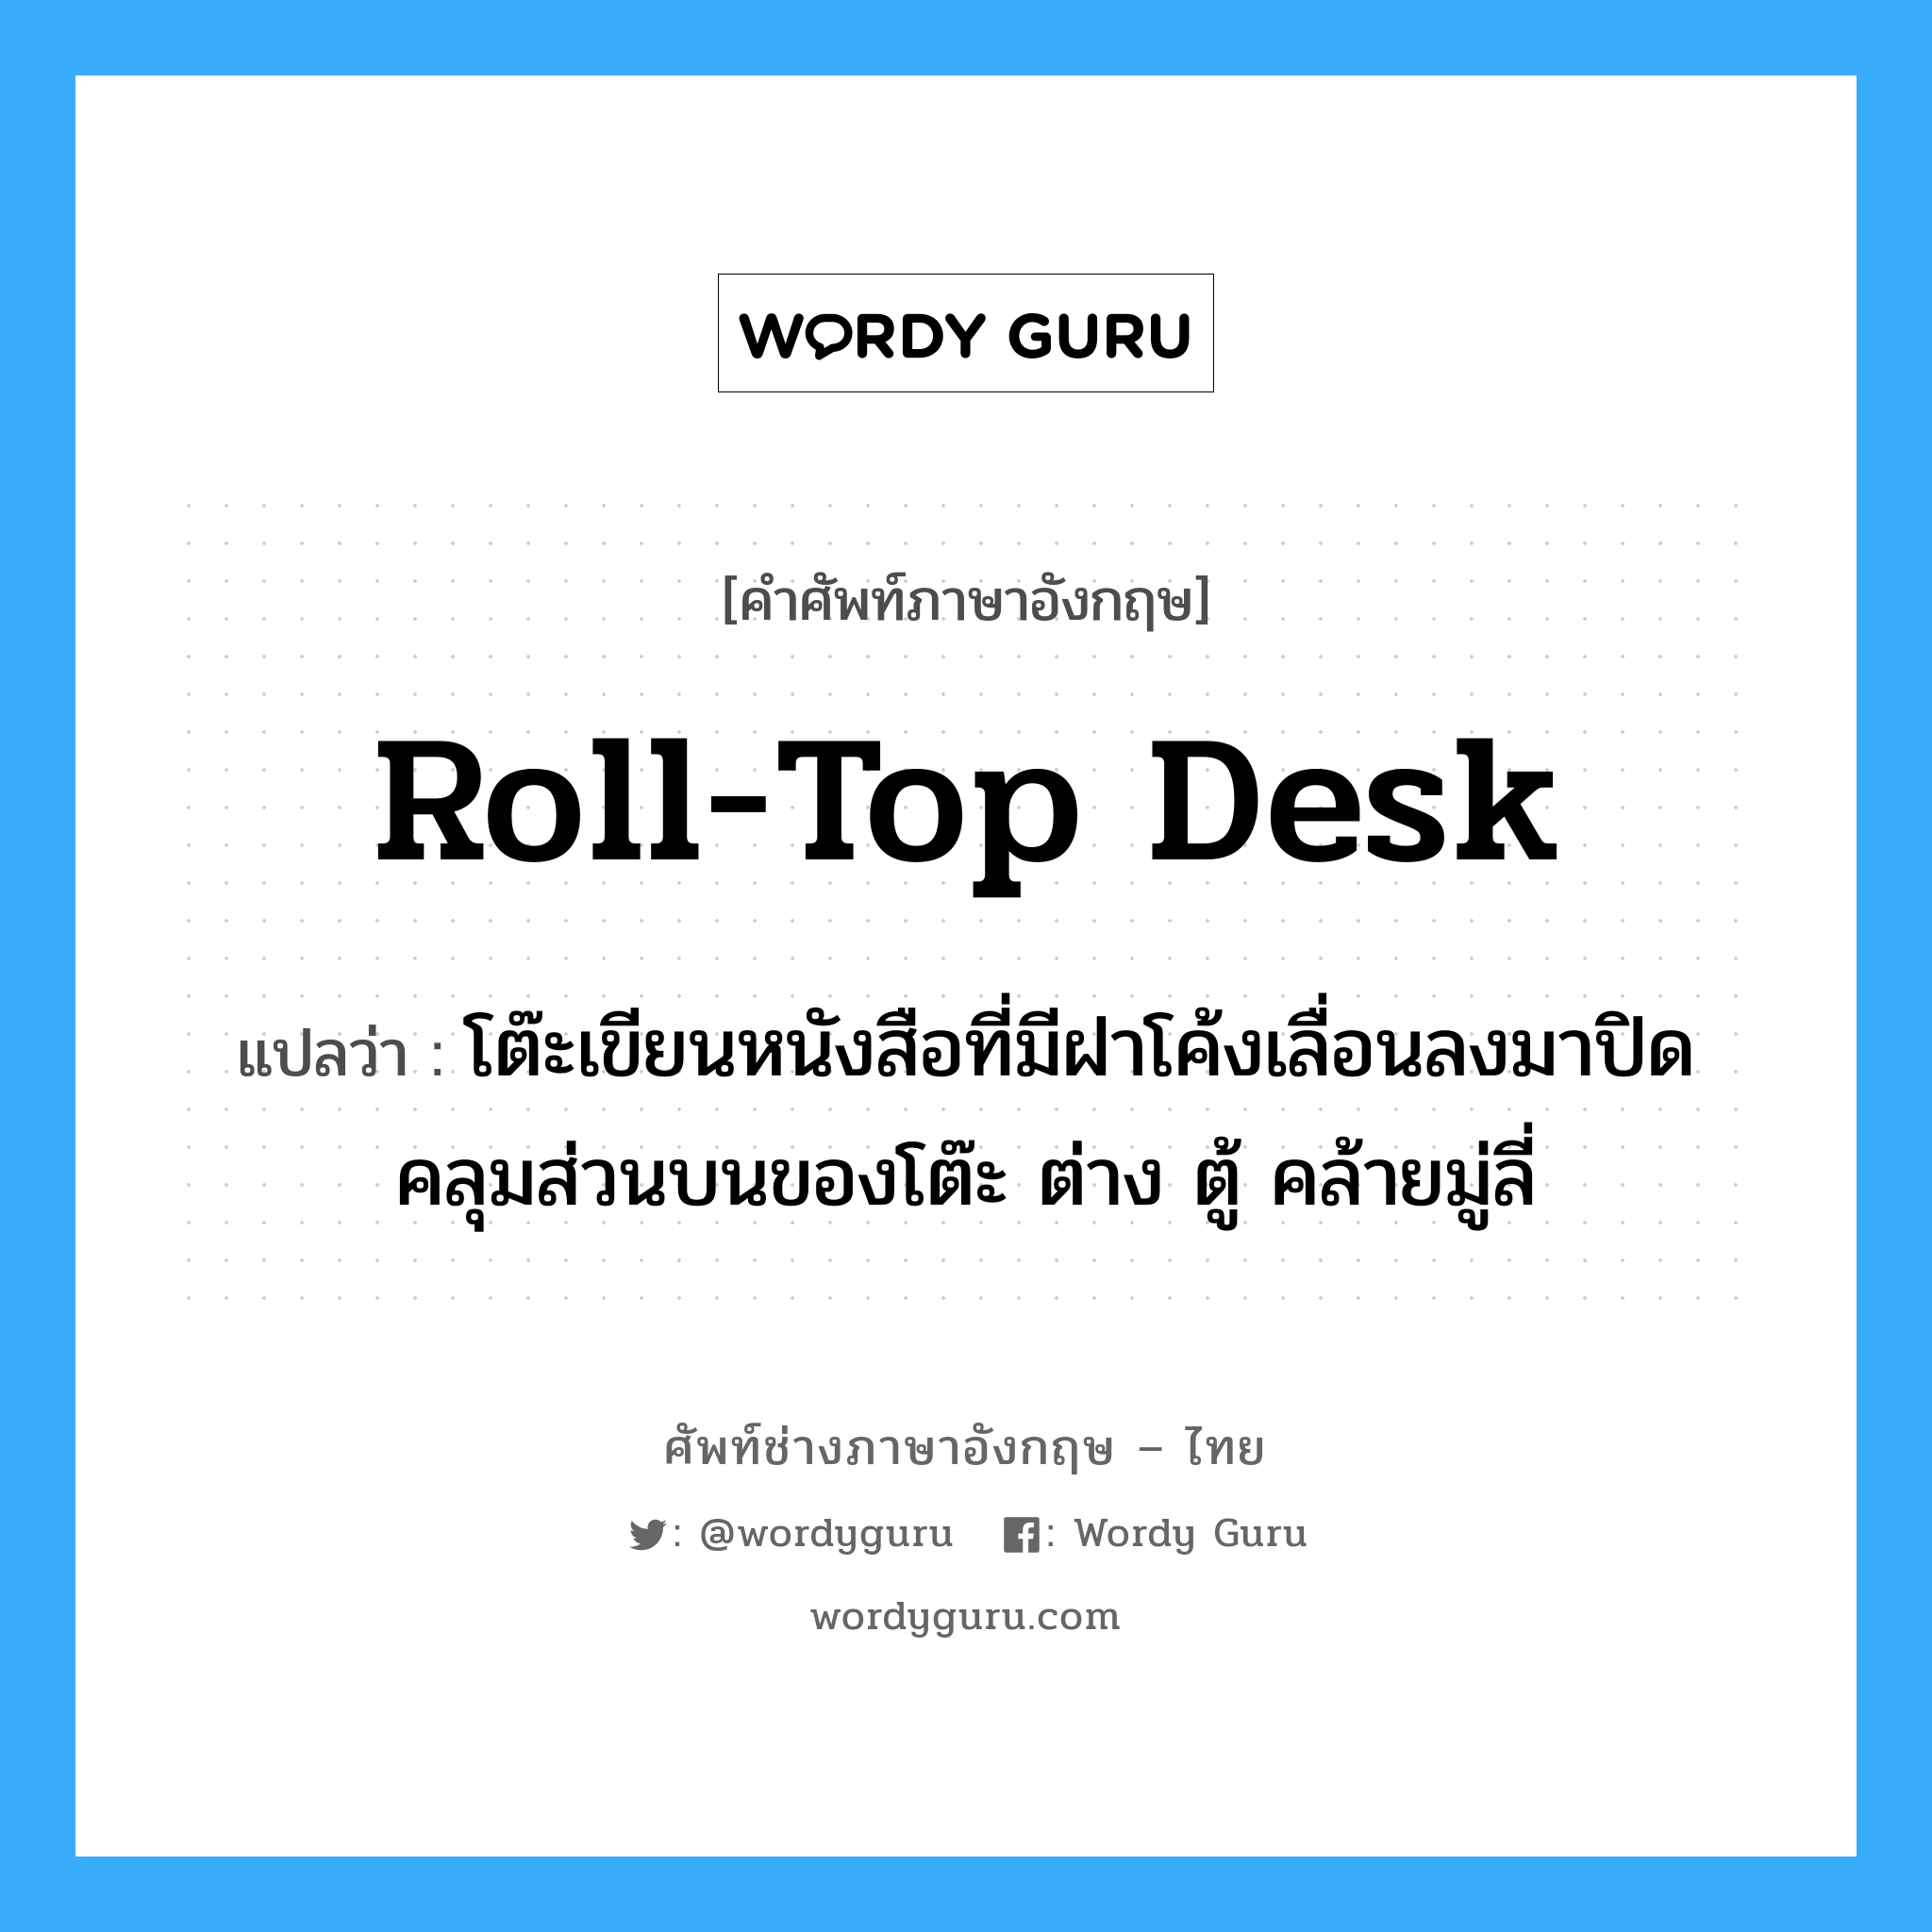 roll-top desk แปลว่า?, คำศัพท์ช่างภาษาอังกฤษ - ไทย roll-top desk คำศัพท์ภาษาอังกฤษ roll-top desk แปลว่า โต๊ะเขียนหนังสือที่มีฝาโค้งเลื่อนลงมาปิดคลุมส่วนบนของโต๊ะ ต่าง ตู้ คล้ายมู่ลี่